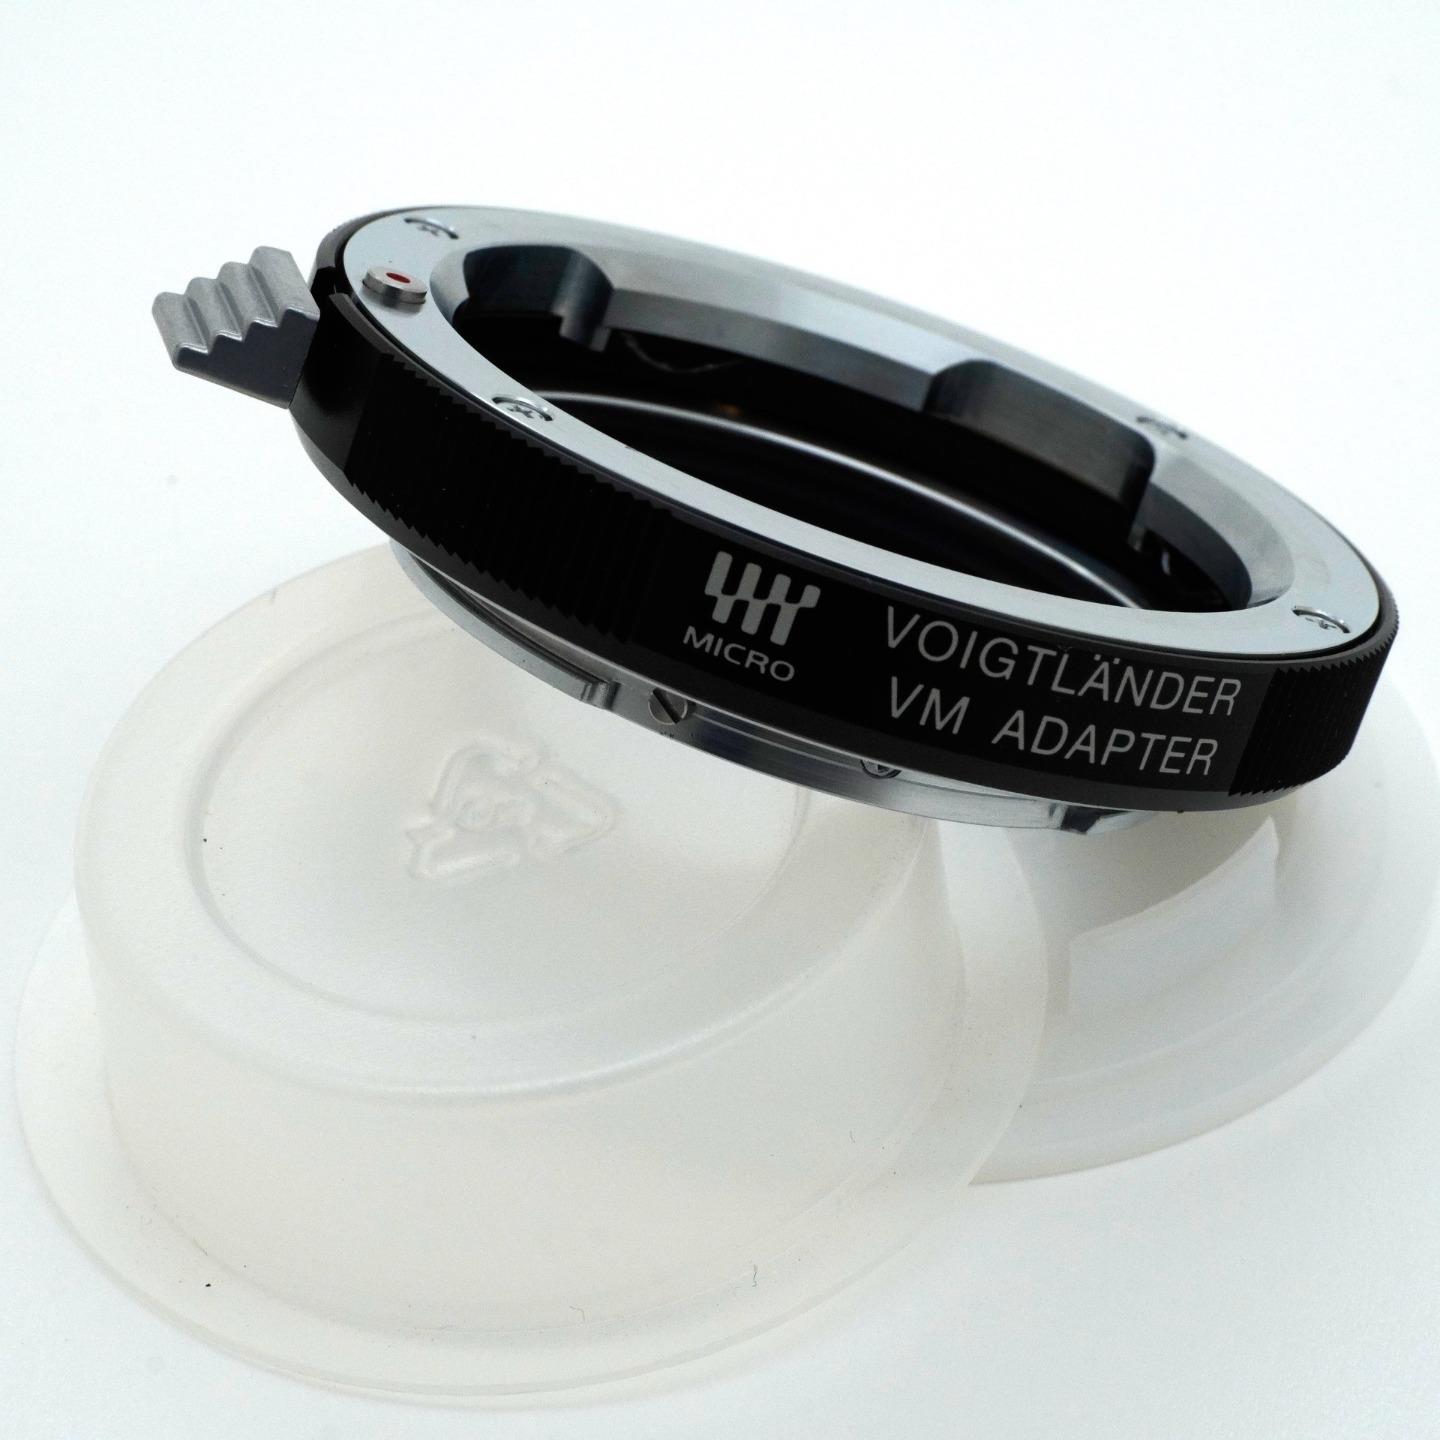 Voigtlander VM Adapter - Leica M-Mount Lens to Micro 4/3 Body LM-MFT 2